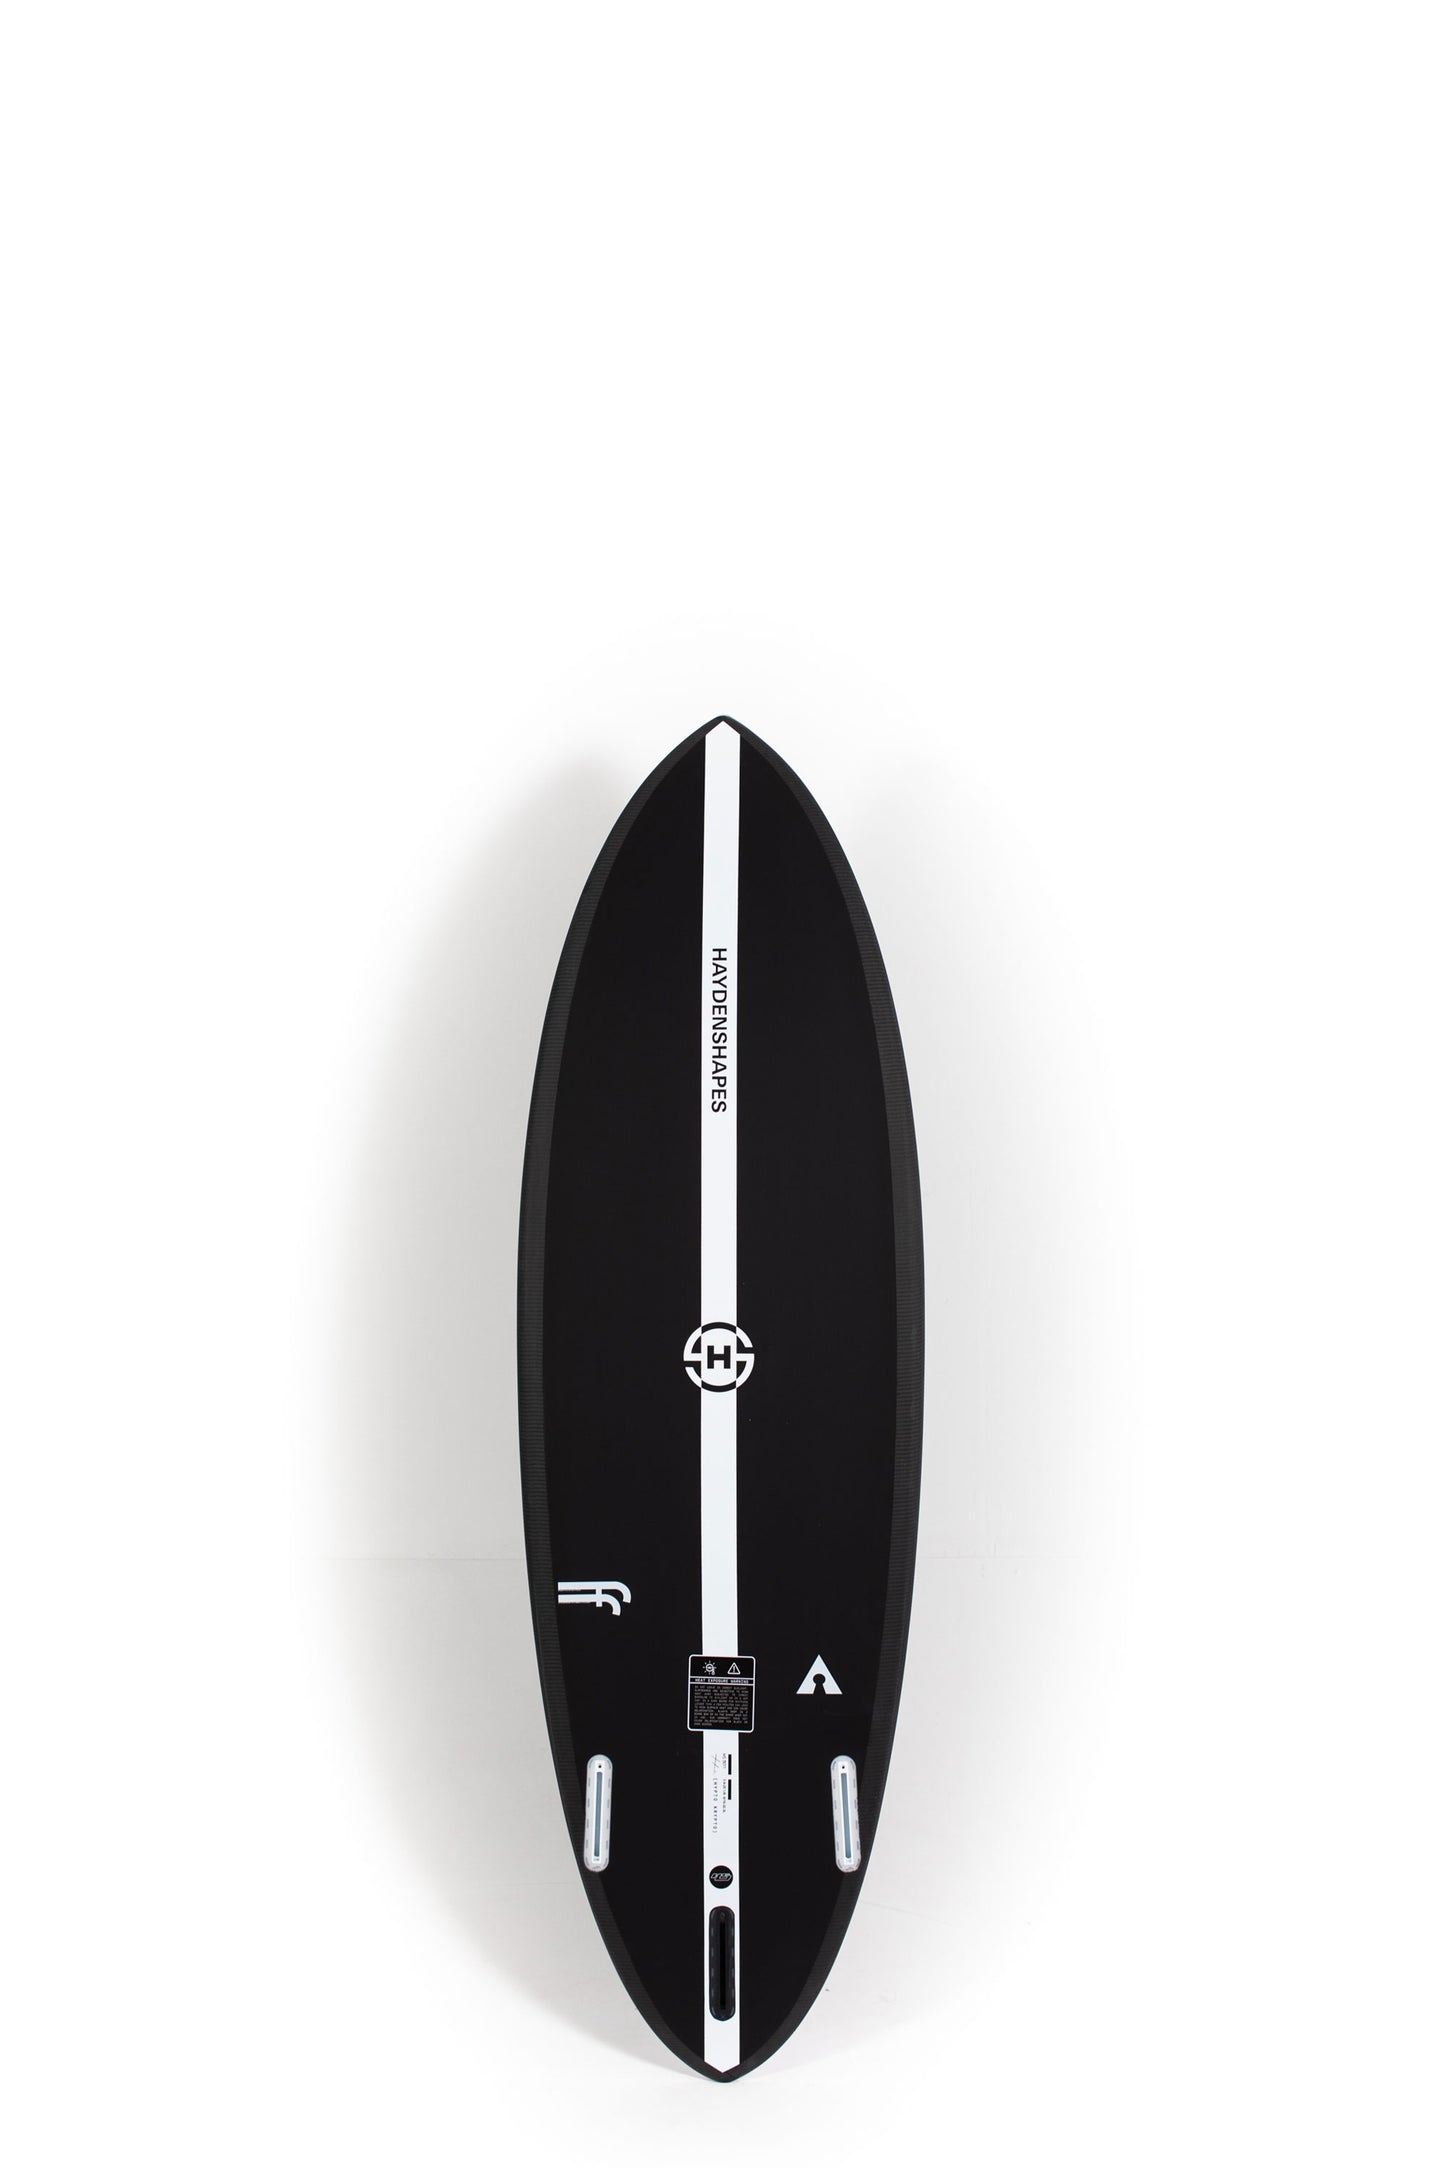 Pukas Surf Shop - HAYDEN SHAPES SURFBOARDS - HYPTO KRIPTO 5'9" x 20 1/8 x 2 9/16 - 32'3 - FFHK-PBI-FU3-509